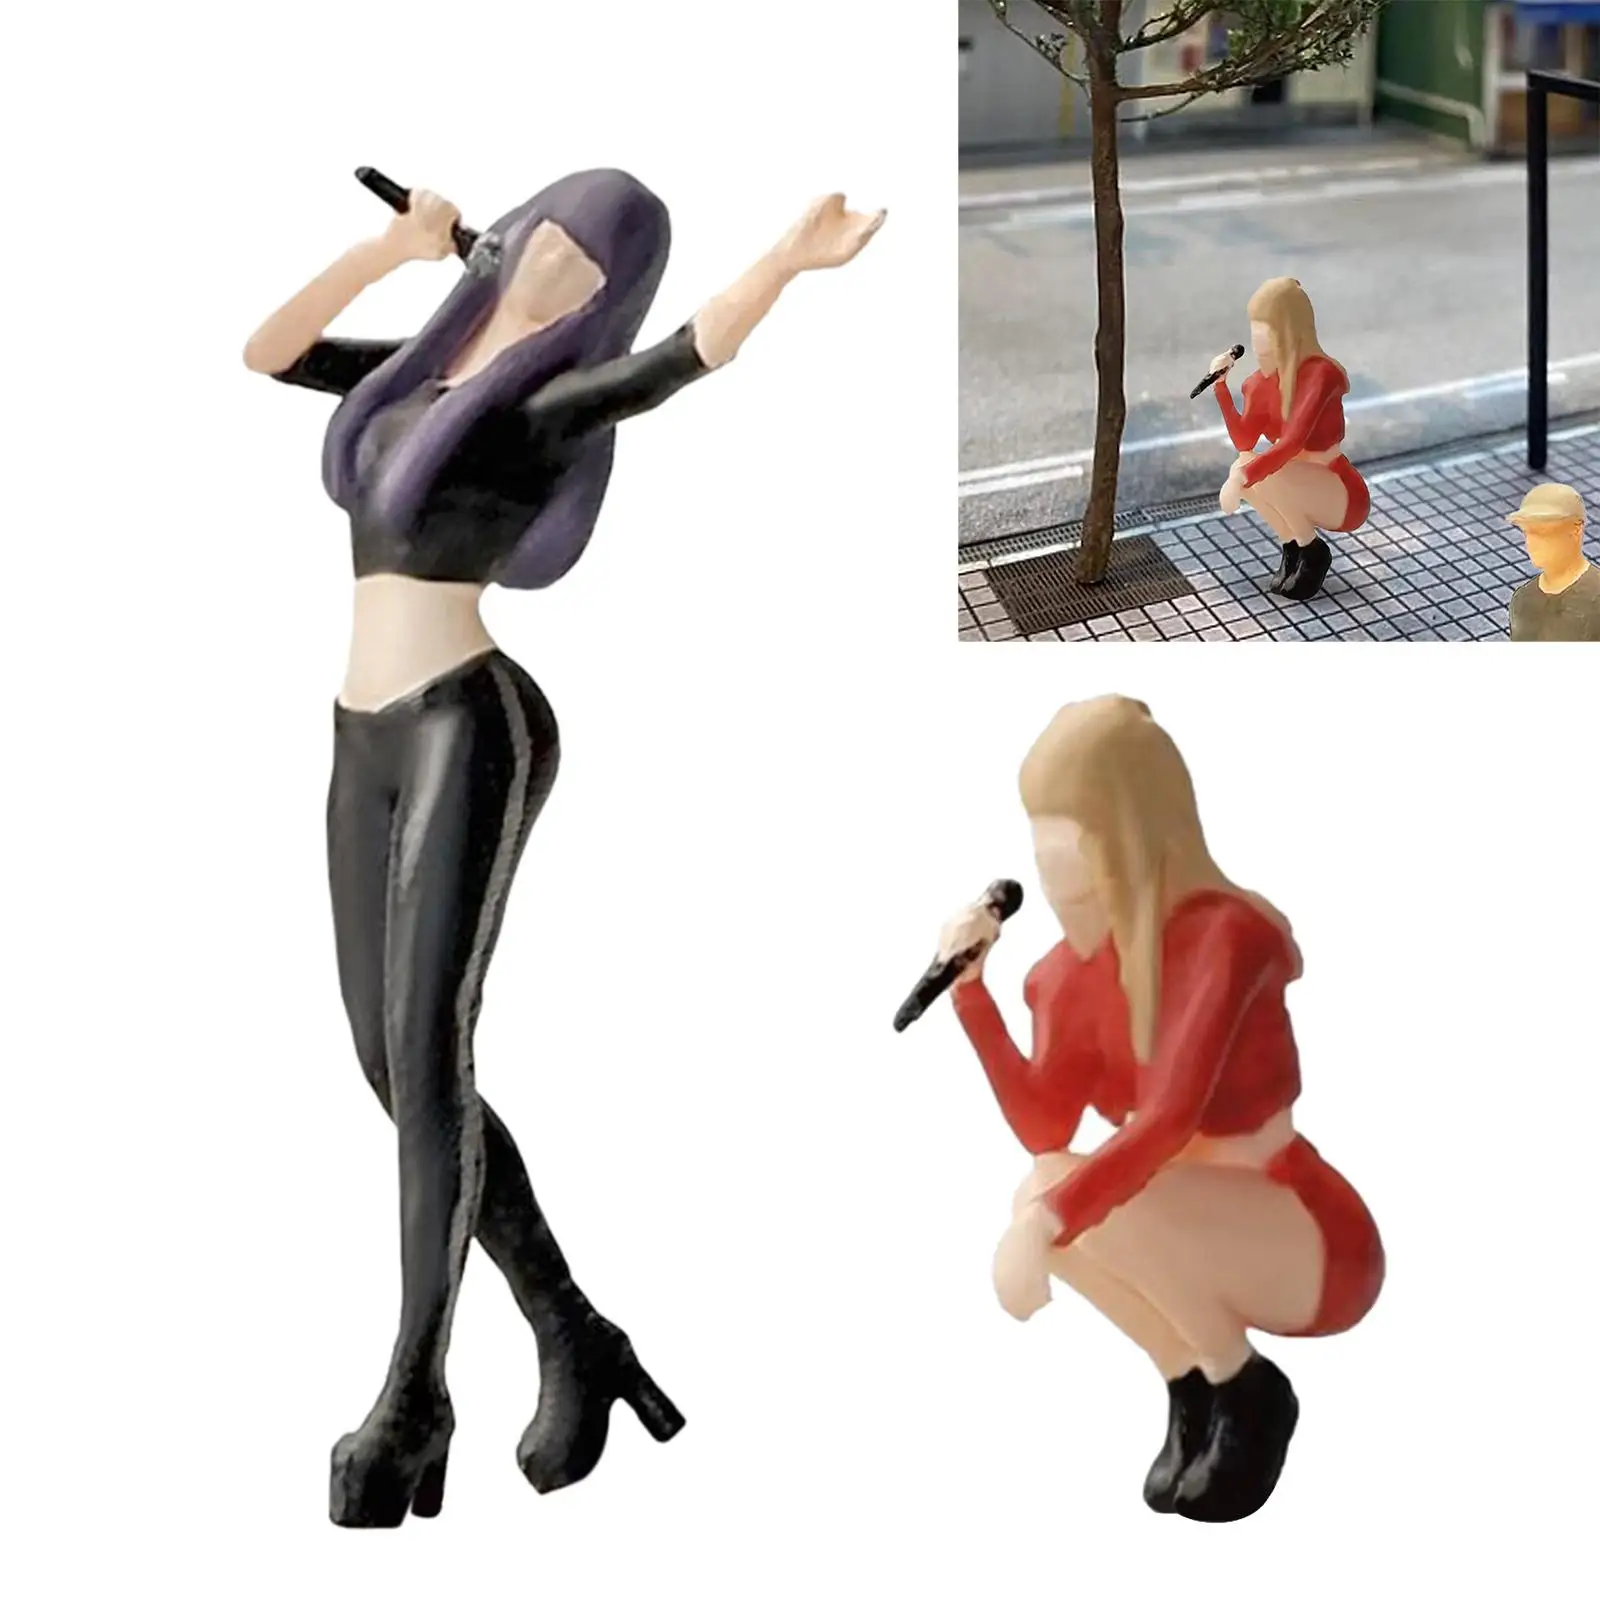 Miniature Model Figures Trains Architectural Painted Figures DIY Layout Scenery Accs 1/64 Singing Figures DIY Scene Decor